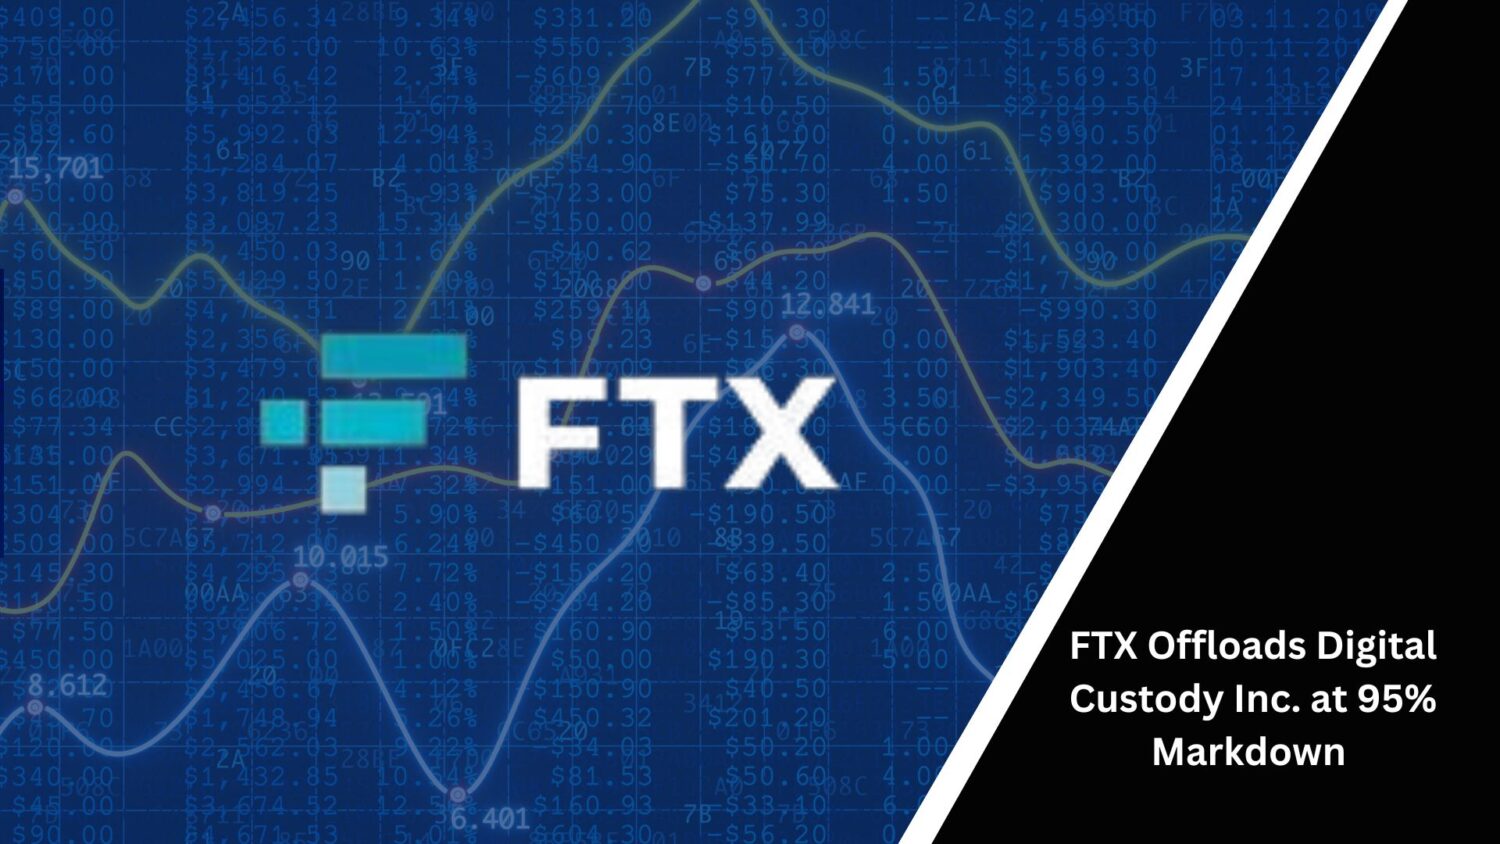 Ftx Offloads Digital Custody Inc. At 95% Markdown